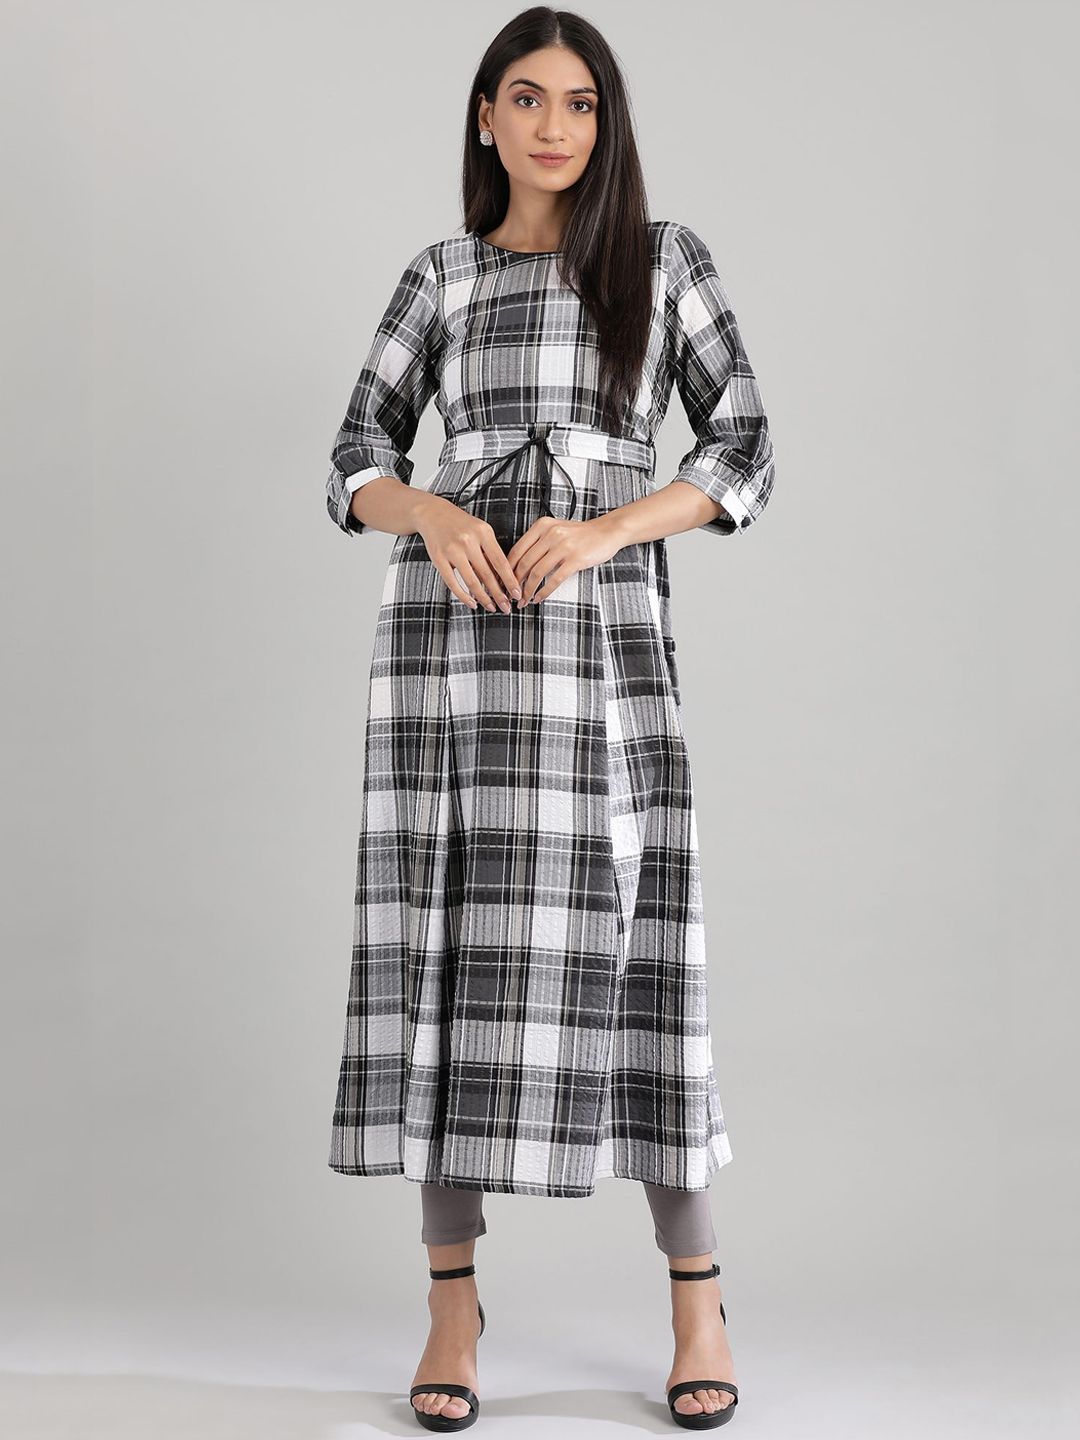 AURELIA Black Checked Empire Midi Dress Price in India